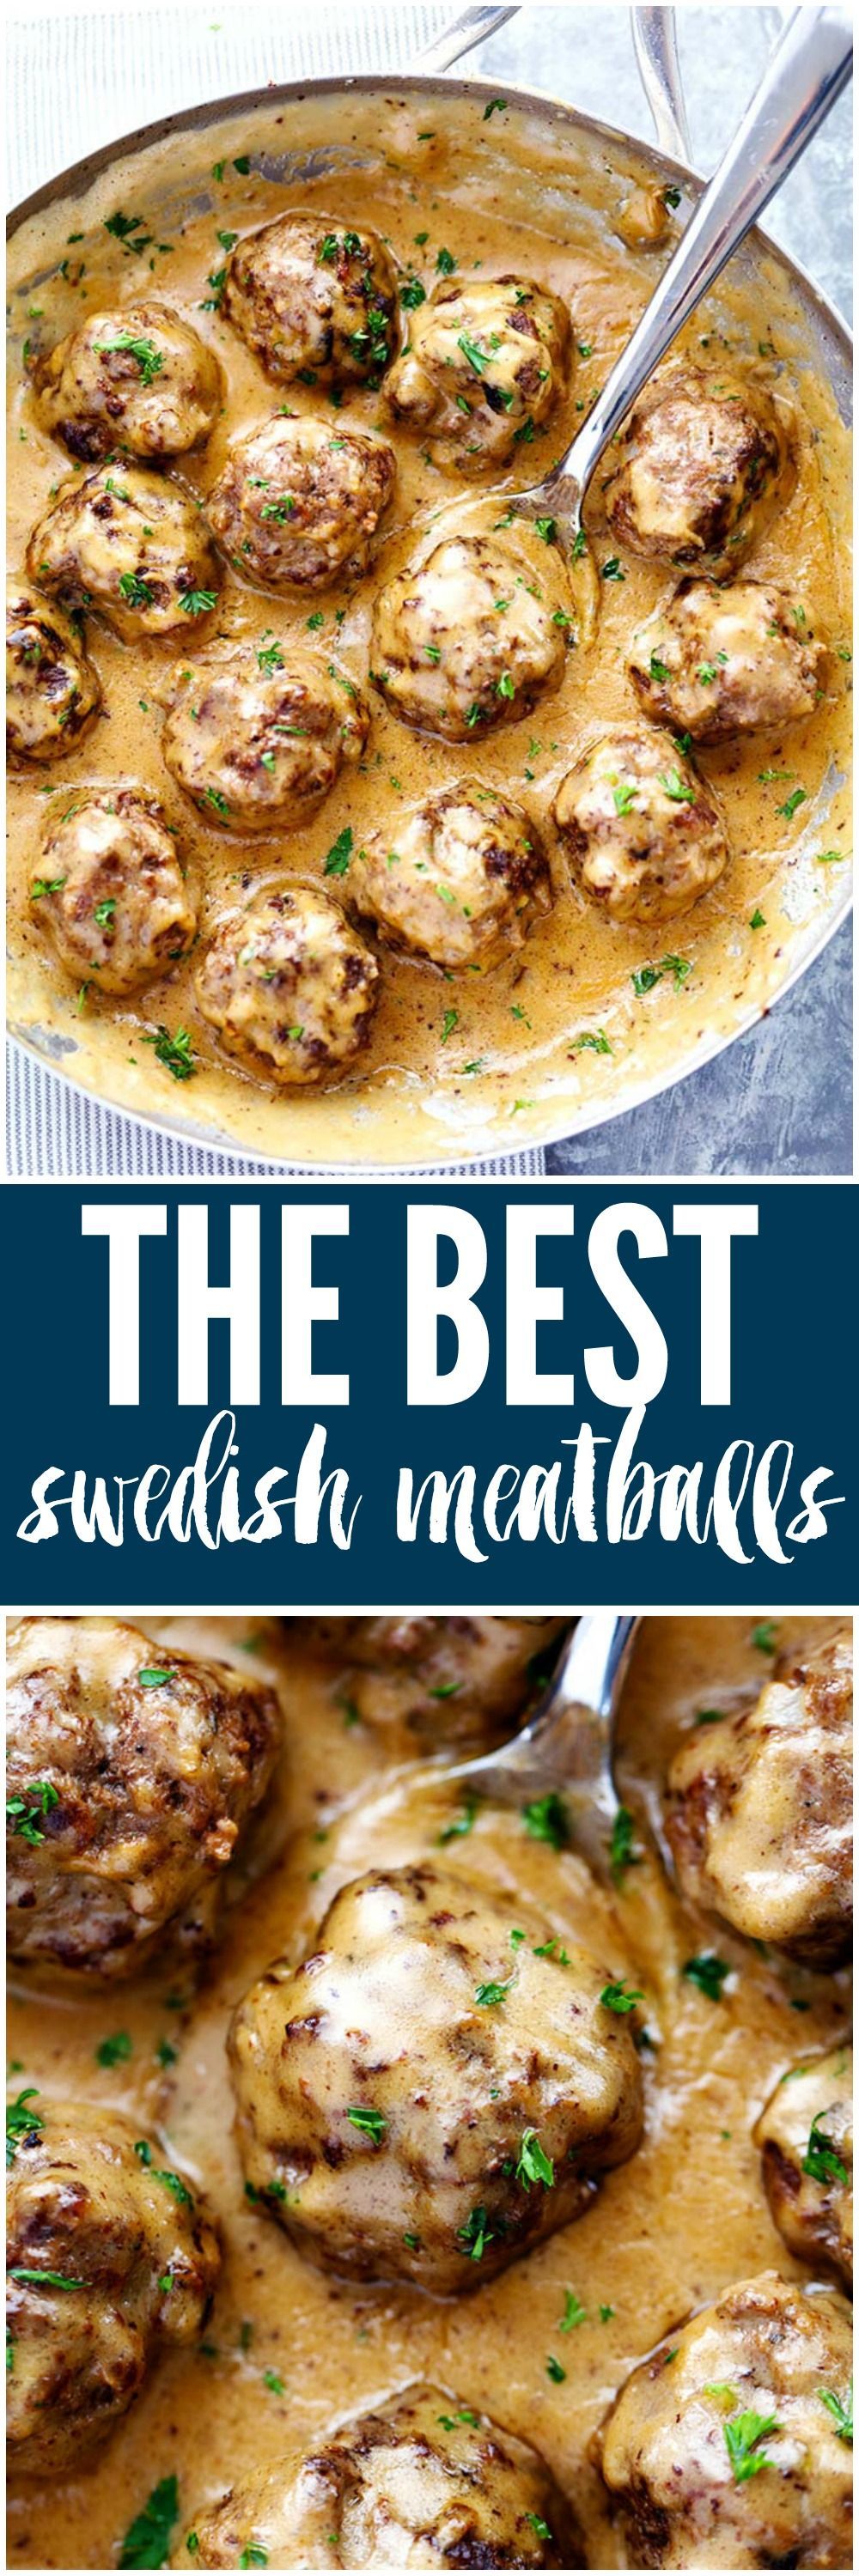 The Best Swedish Meatballs